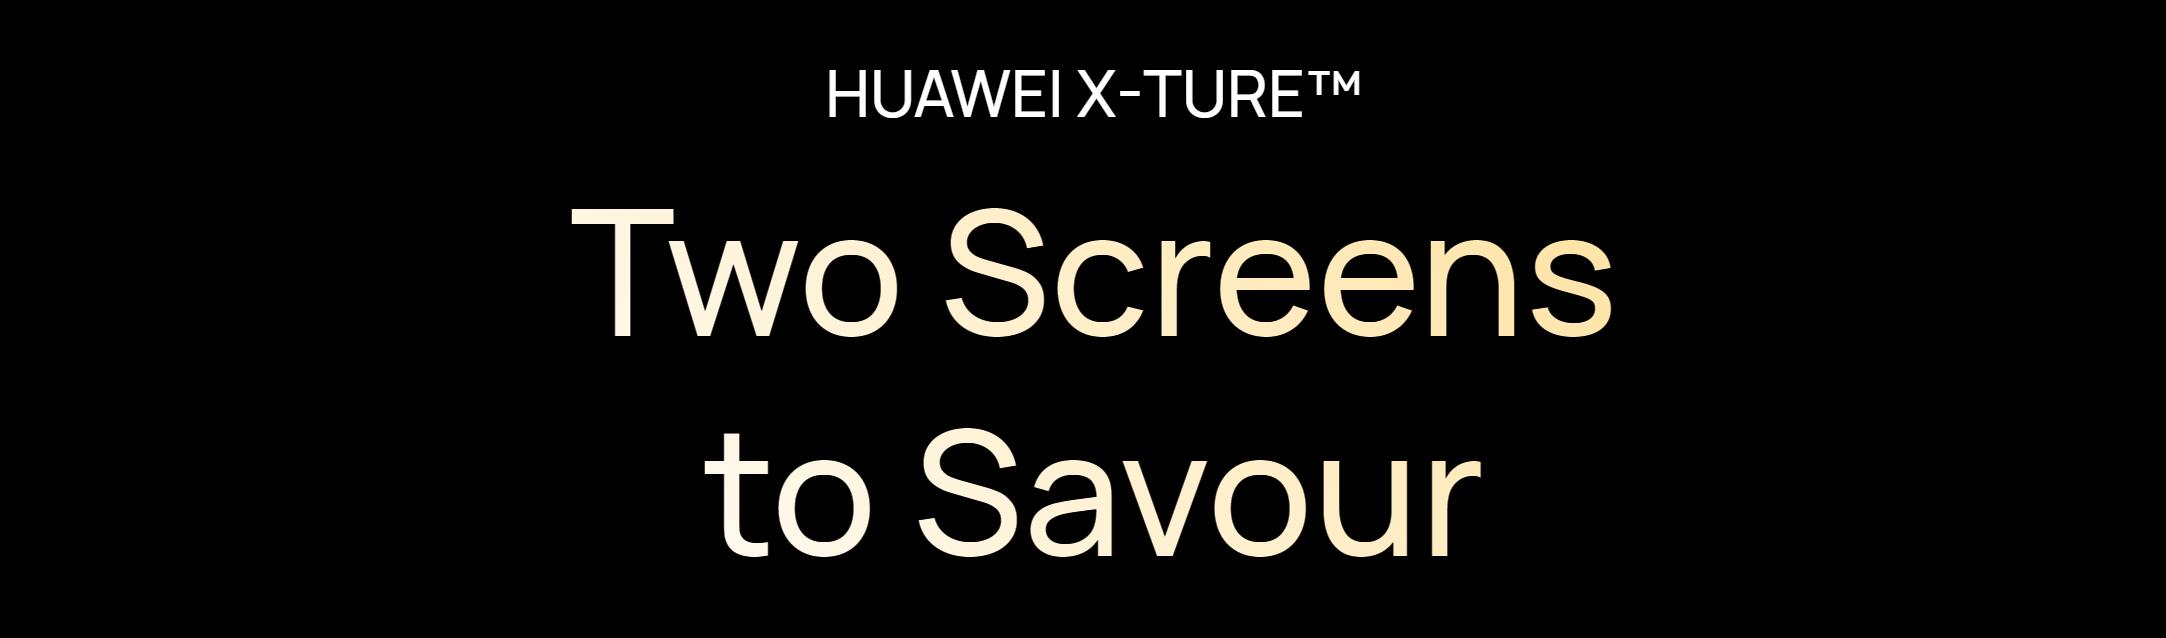 Huawei Mate X3 